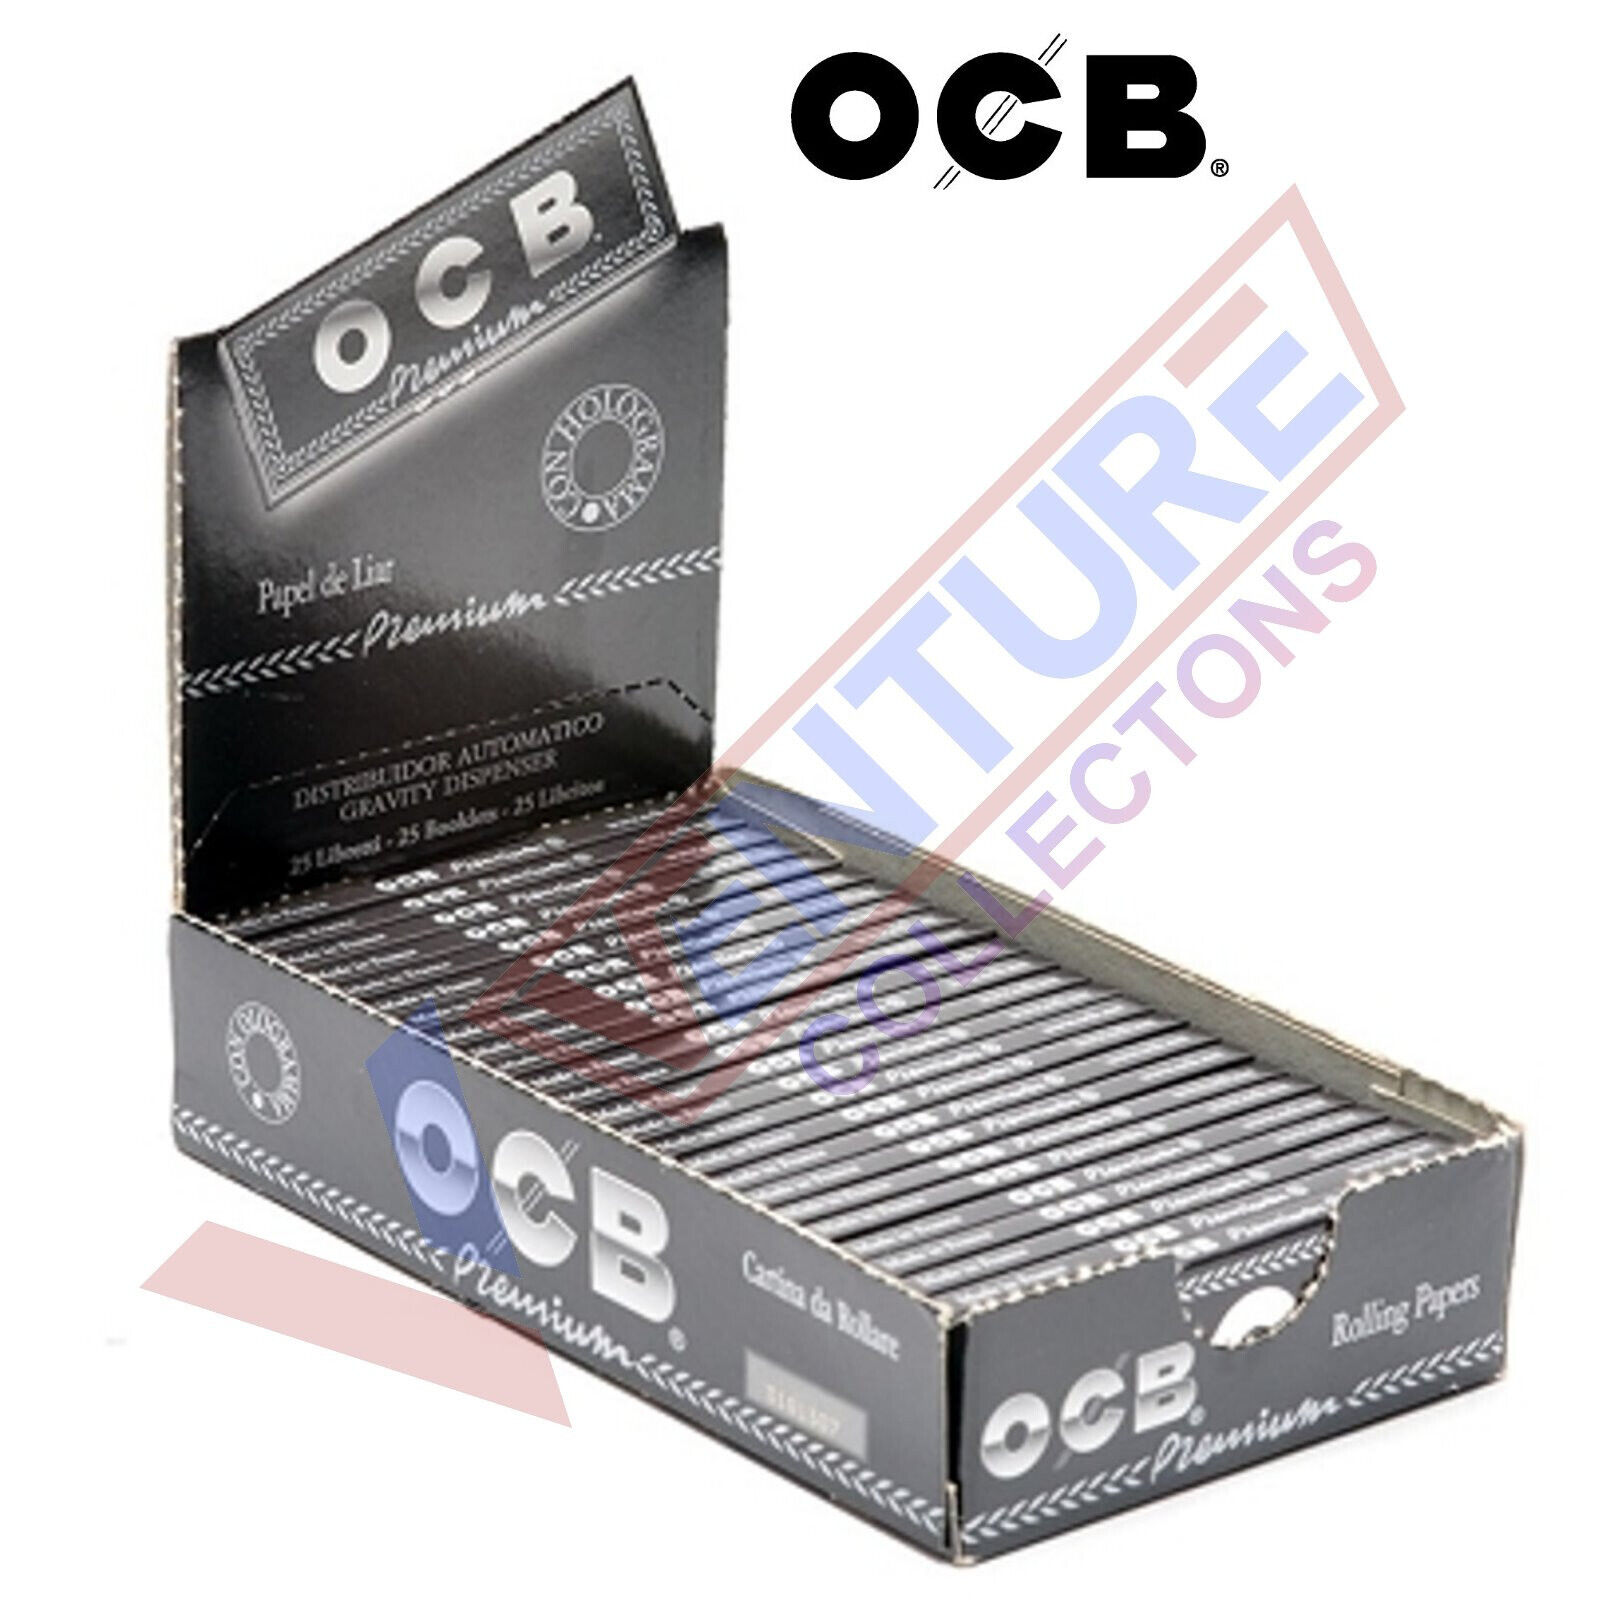 Full Box OCB Premium Black 1 1/4 1.25 Rolling Papers 24 Booklet (50 Paper Each)